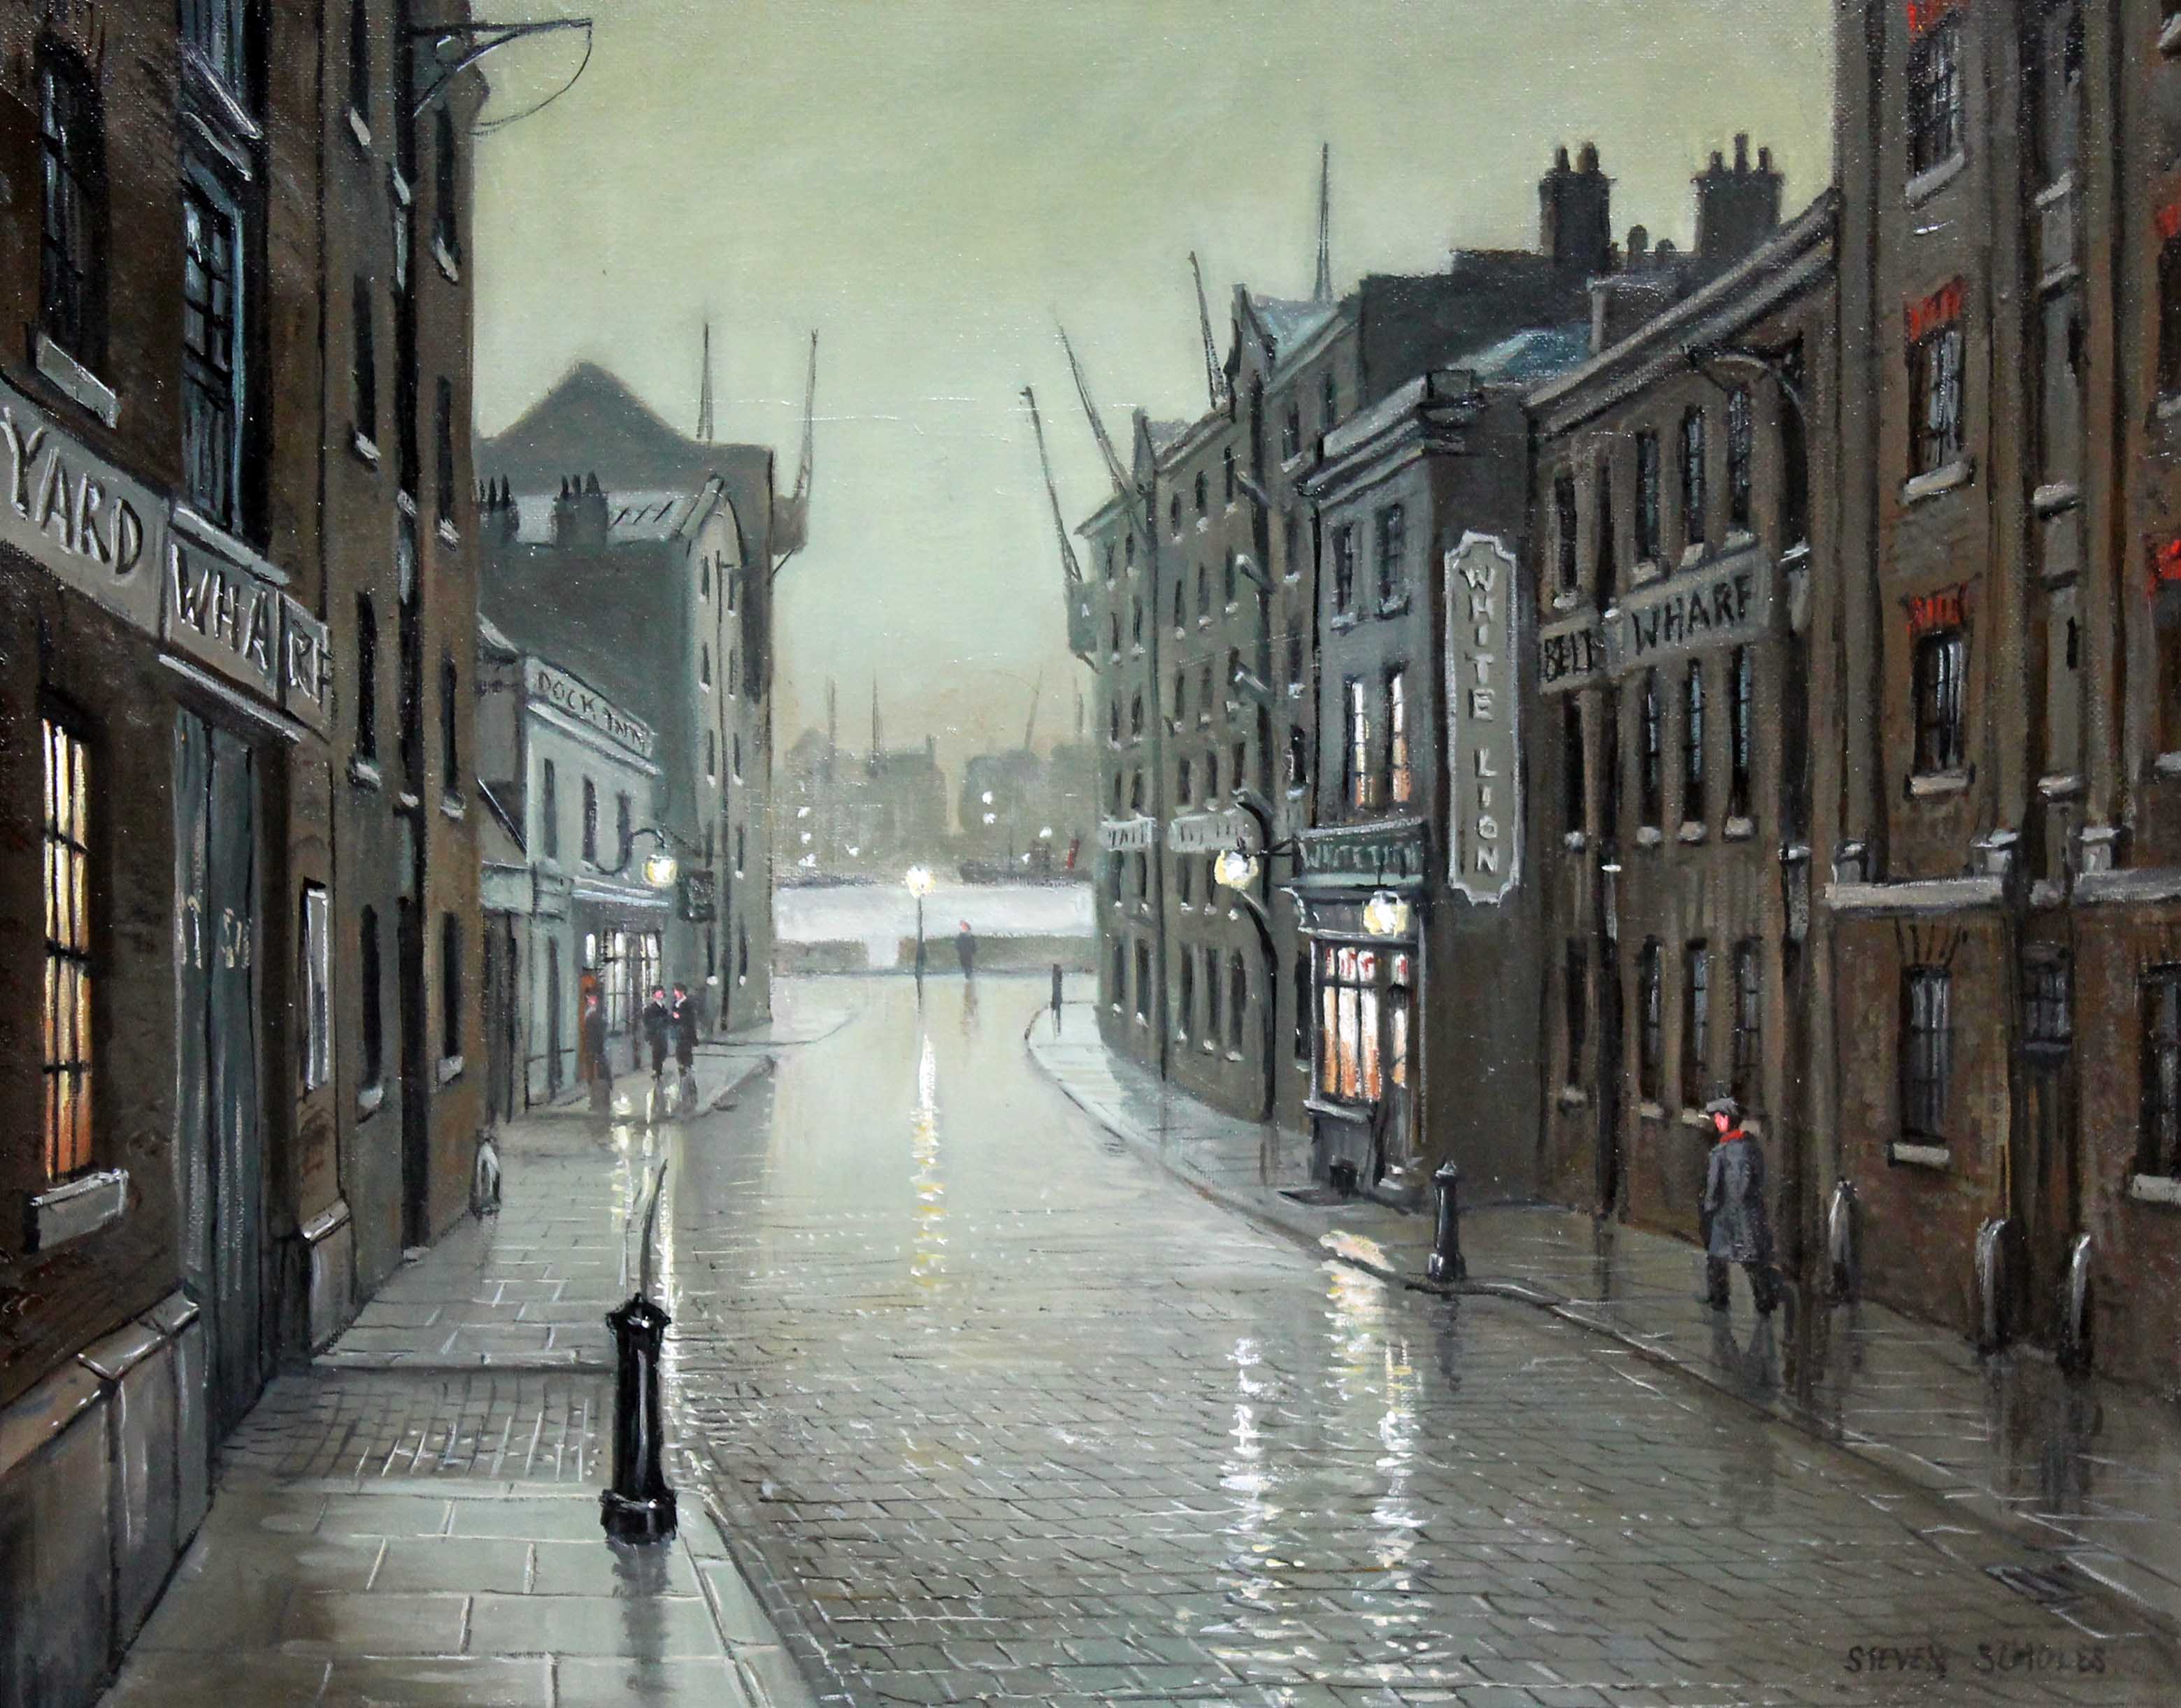 Steven Scholes (b1952), "Mill St. Bermondsey London 1962", oil on canvas, 49cm x 38cm, signed